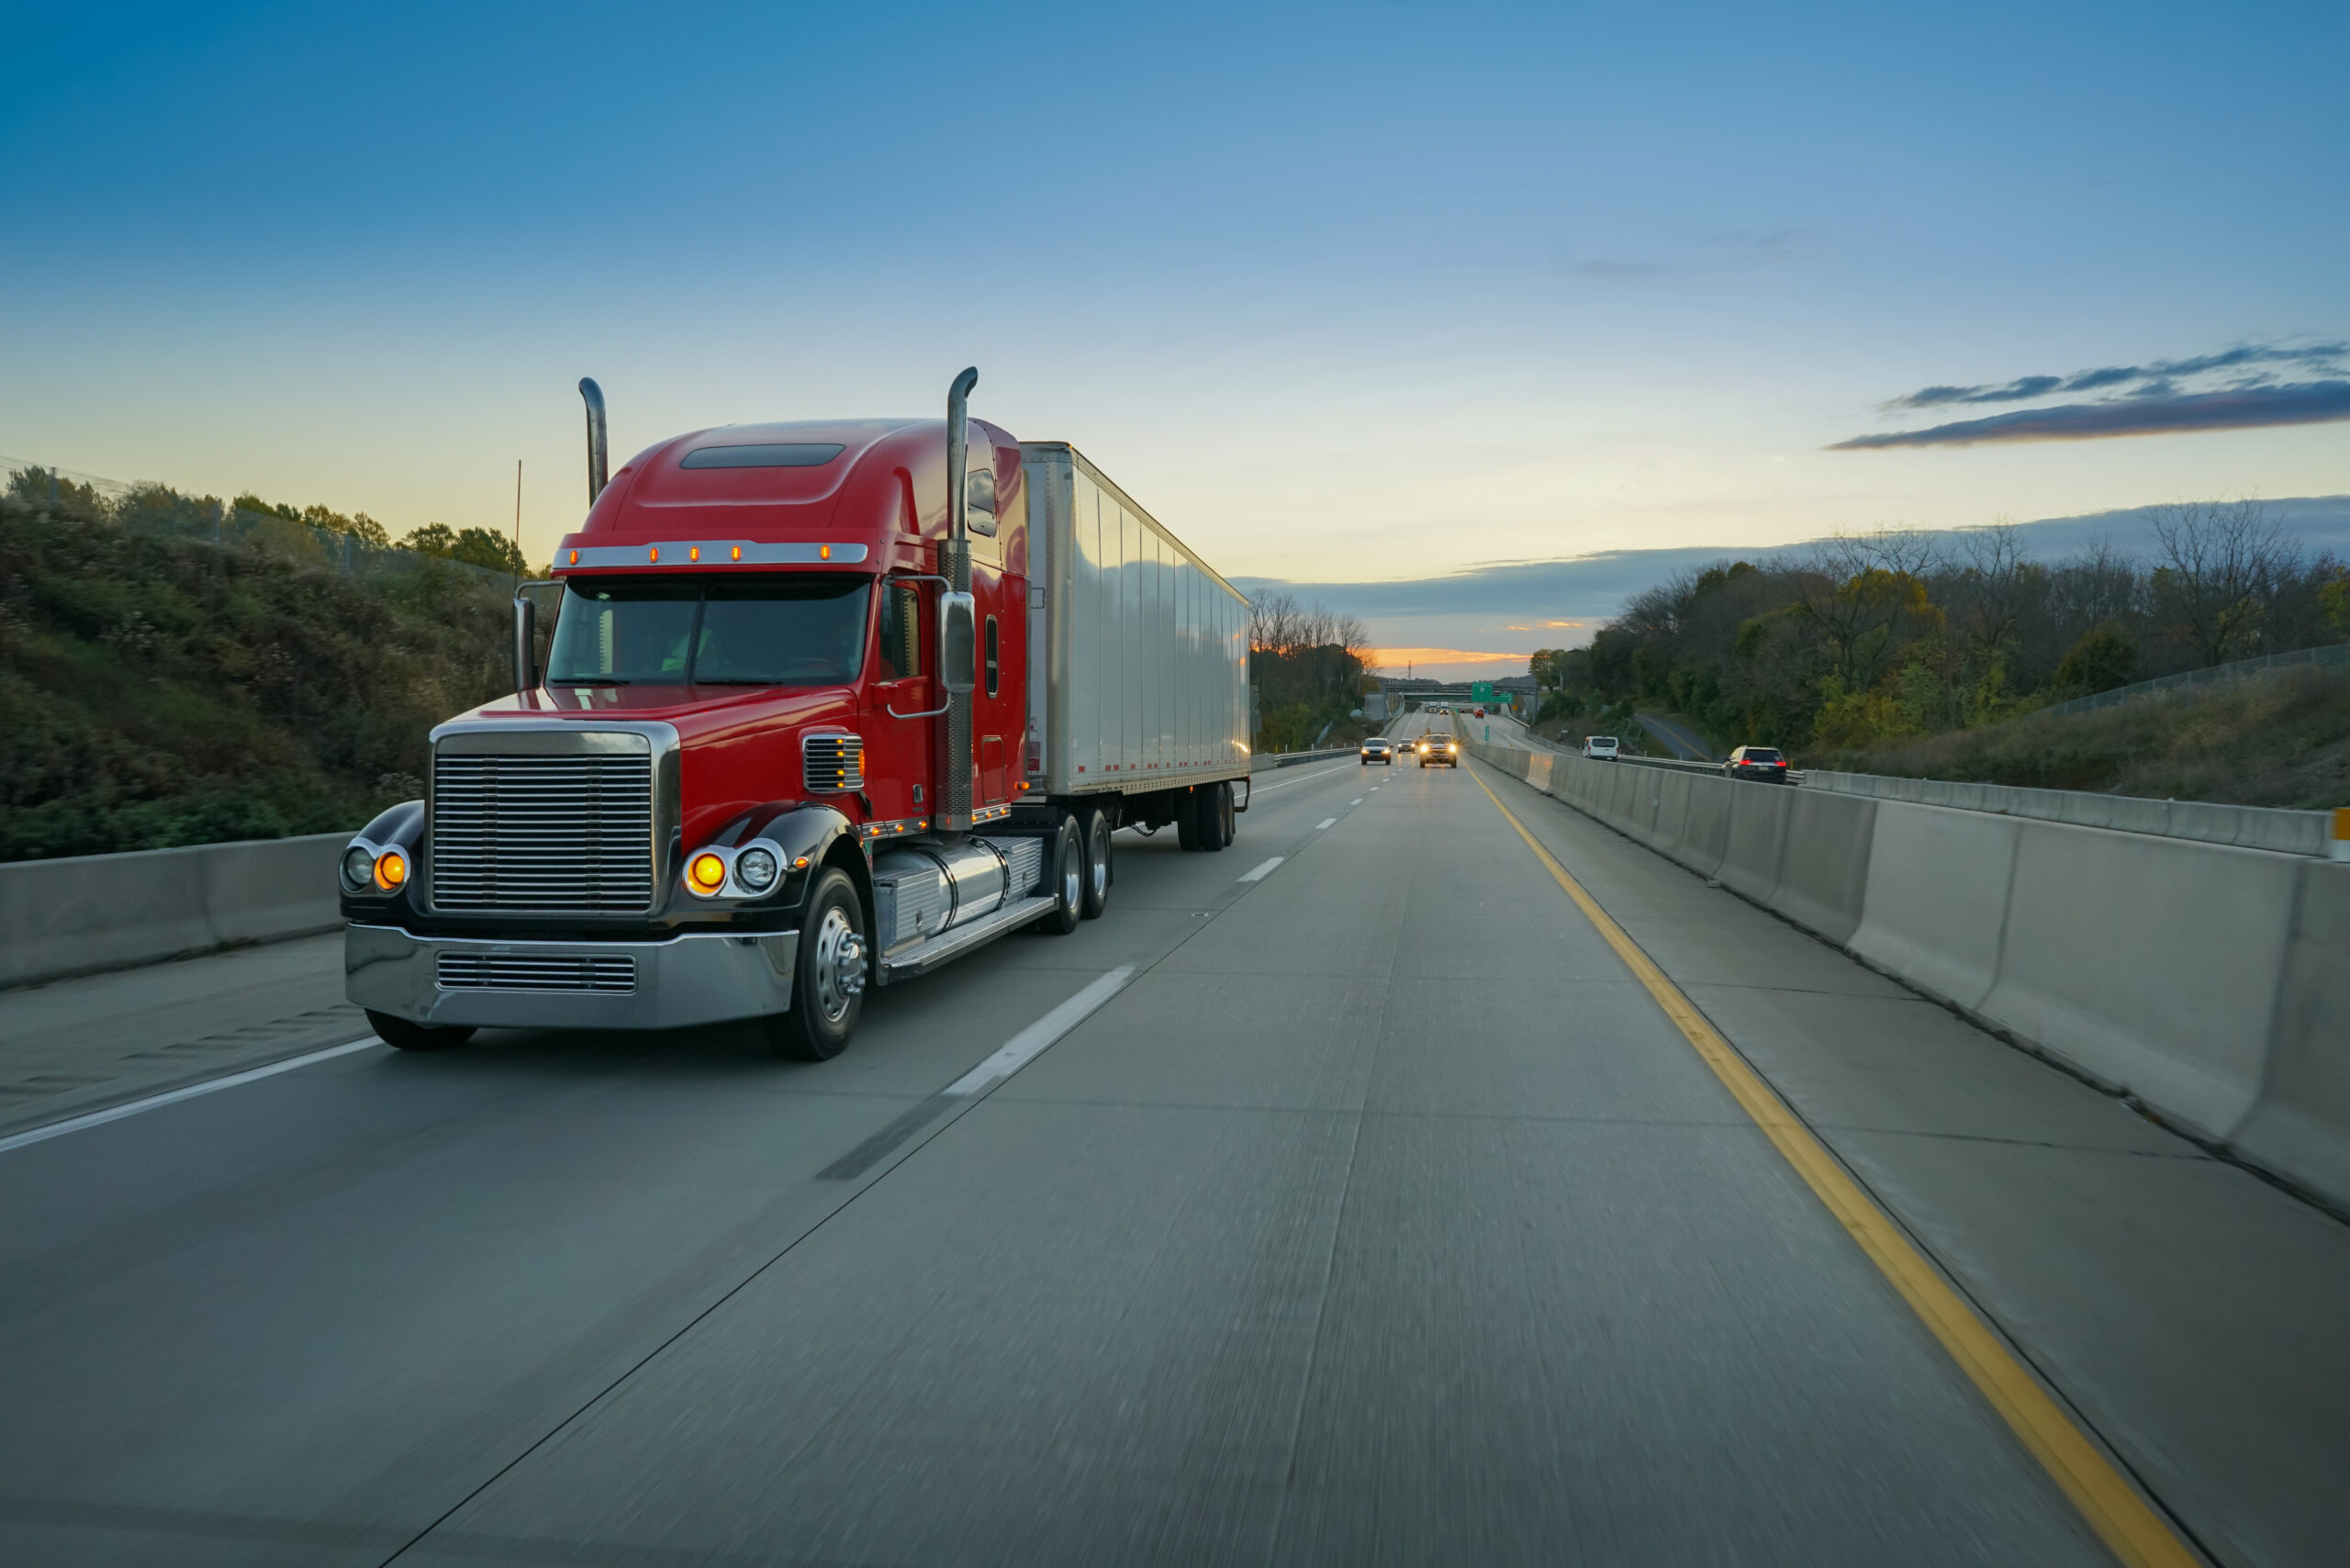 Diesel Trucks Fill Gap While Alternative Fuels, Technology Develop, Whitepaper Shows